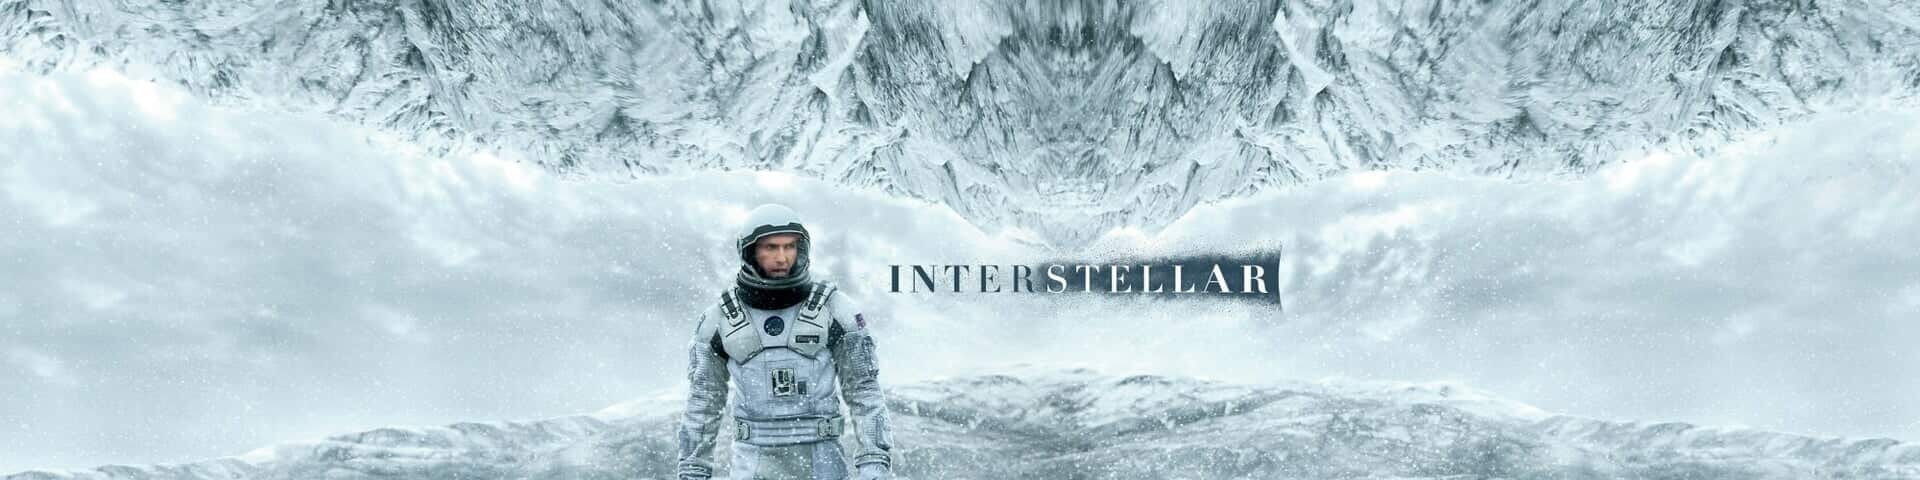 Interstellar - Trailer - Official Warner Bros. UK 